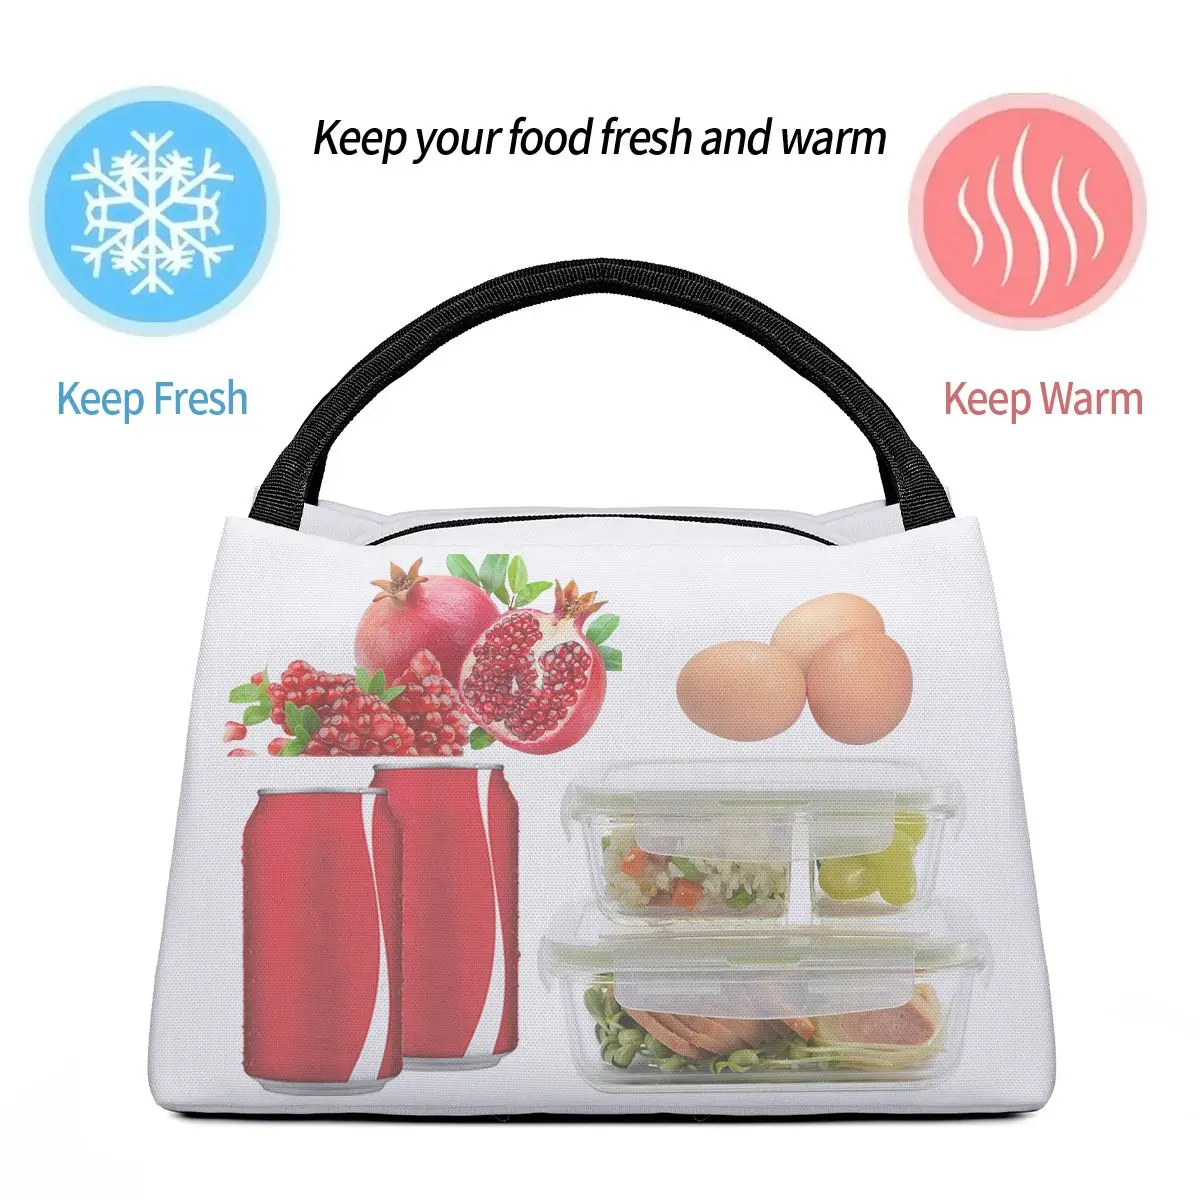 Chibi Nezuko Demon Slayer Lunch Bag Kimetsu no Yaiba Fun Lunch Box School Portable Cooler Bag Designer Thermal Tote Handbags images - 6